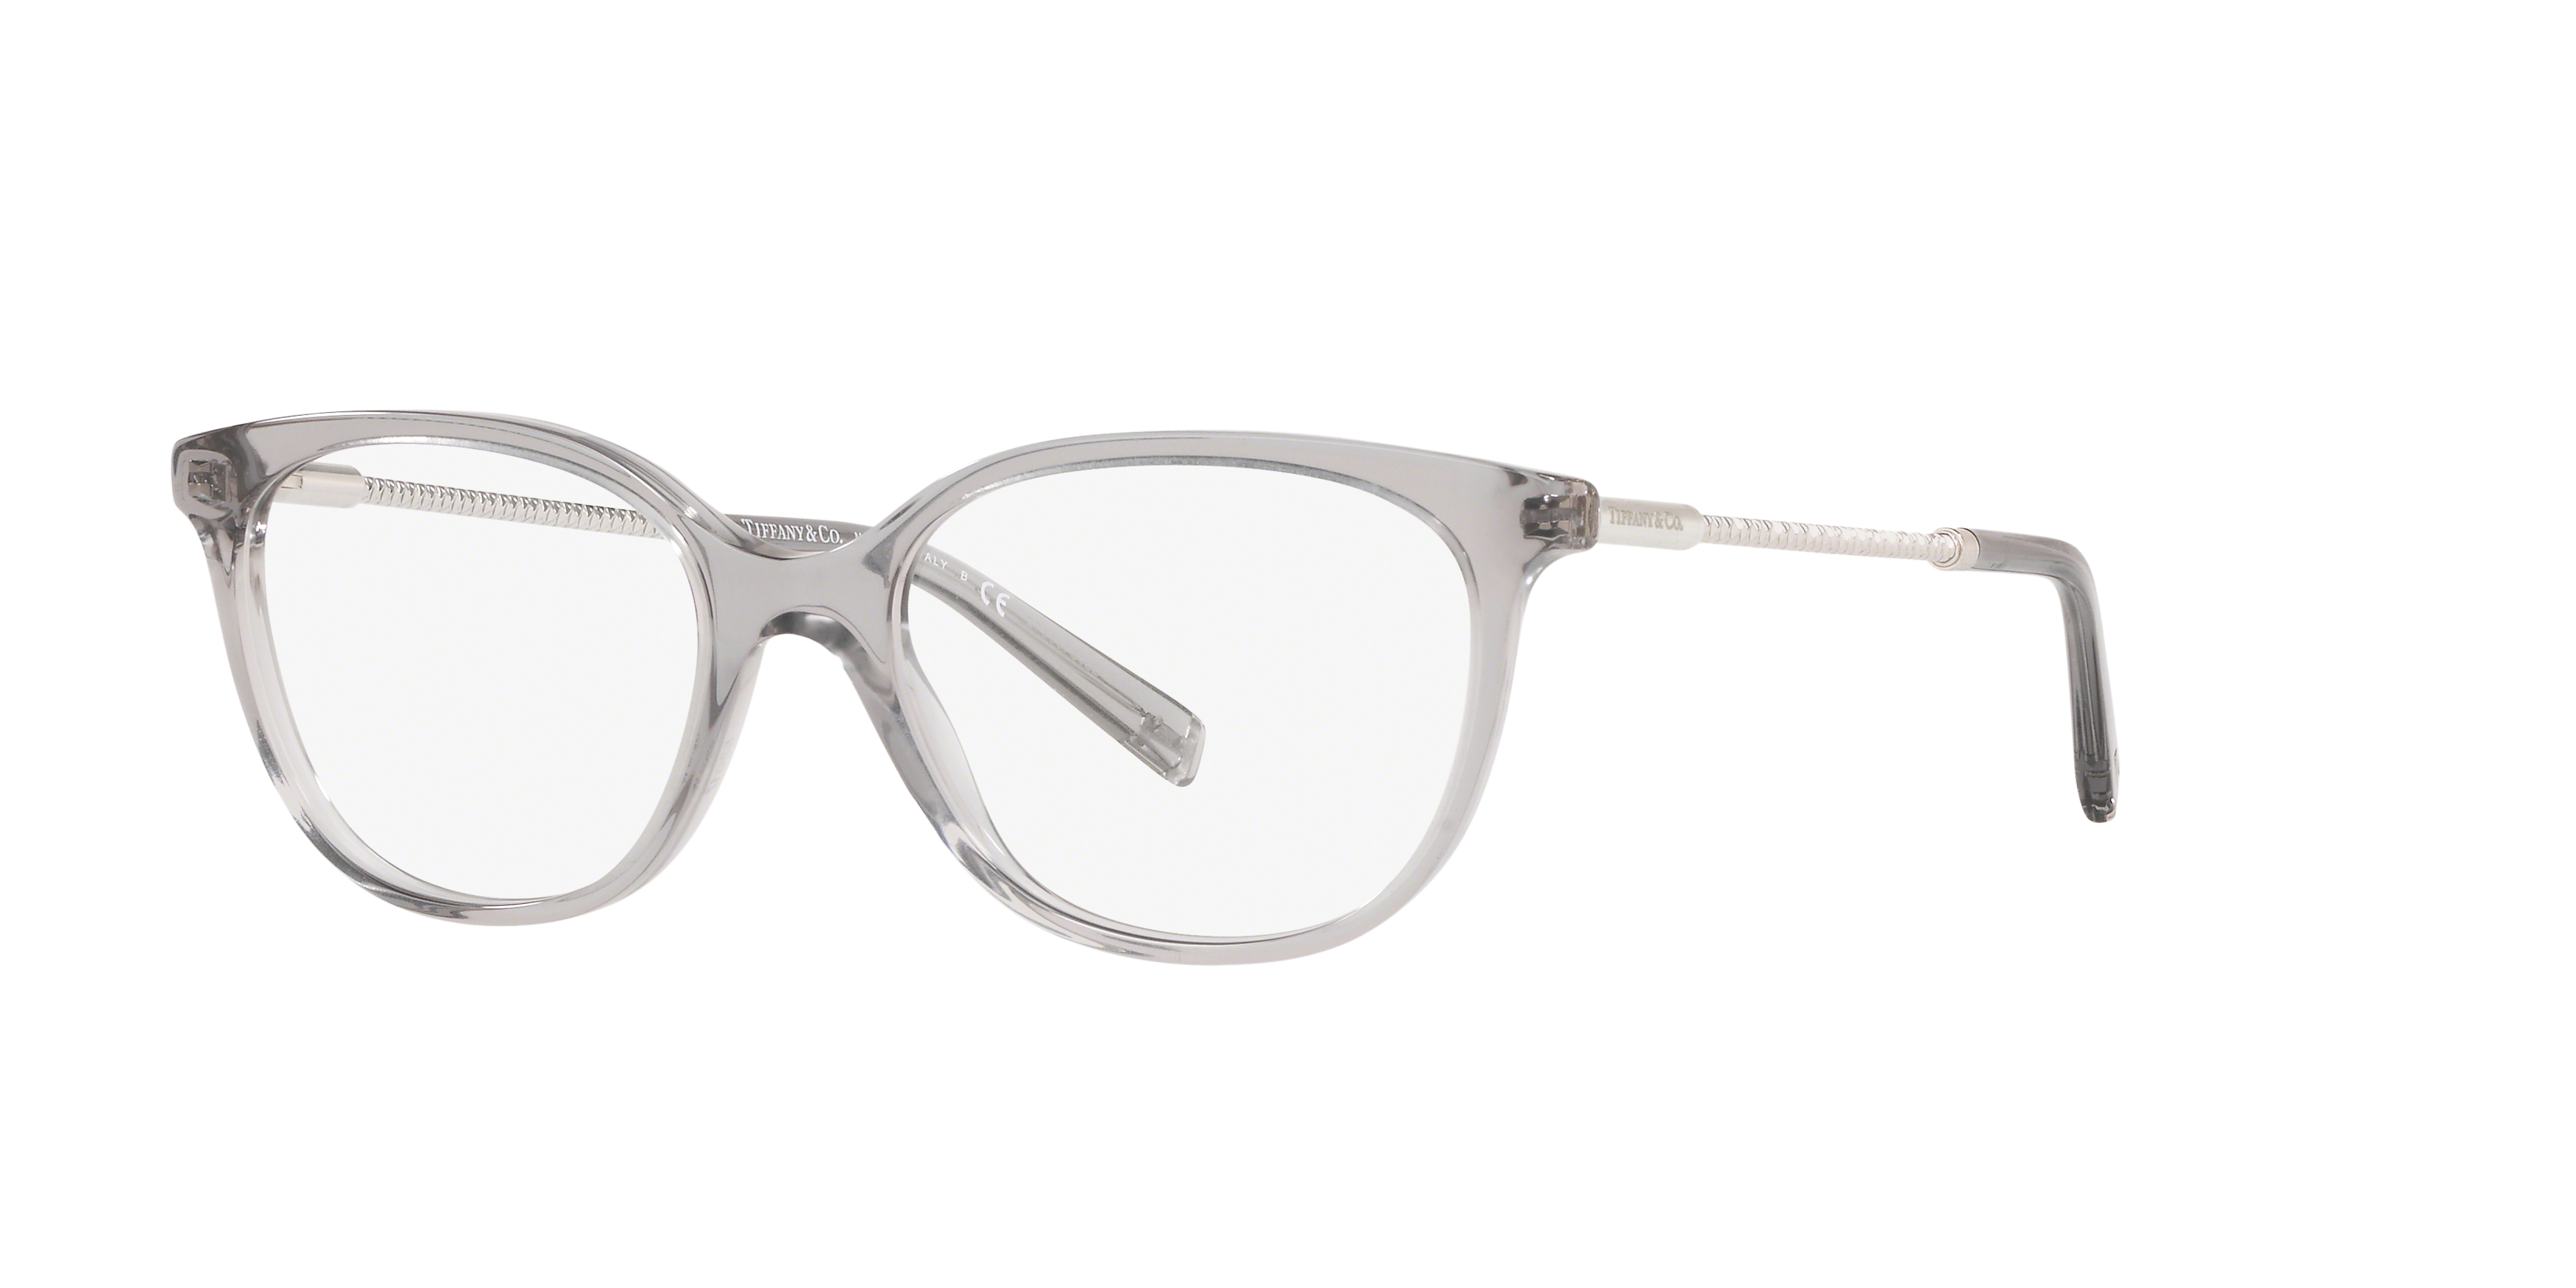 Angle_Left01 Tiffany & Co TF 2168 Glasses Transparent / Transparent, Grey